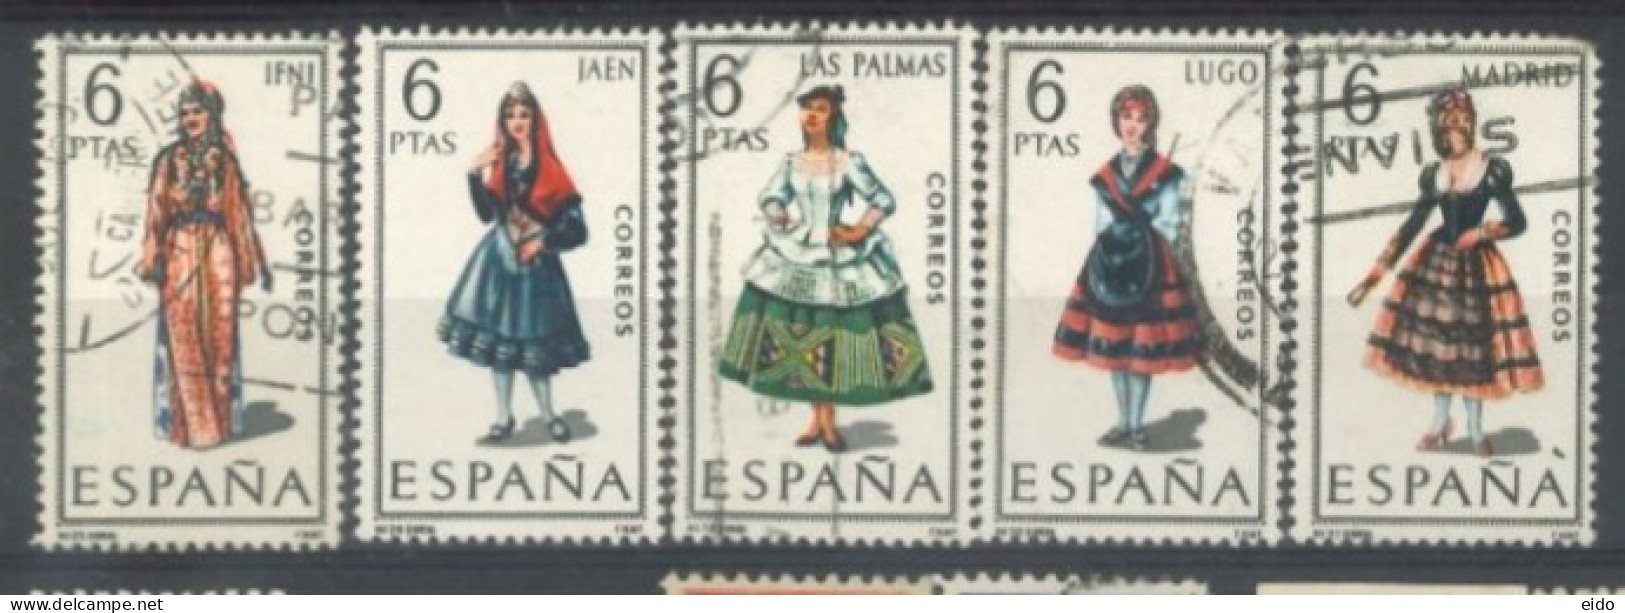 SPAIN, 1969, REGIONAL COSTUMES STAMPS SET OF 5, # 1416/17,1421/22/34, &1437, USED. - Usados